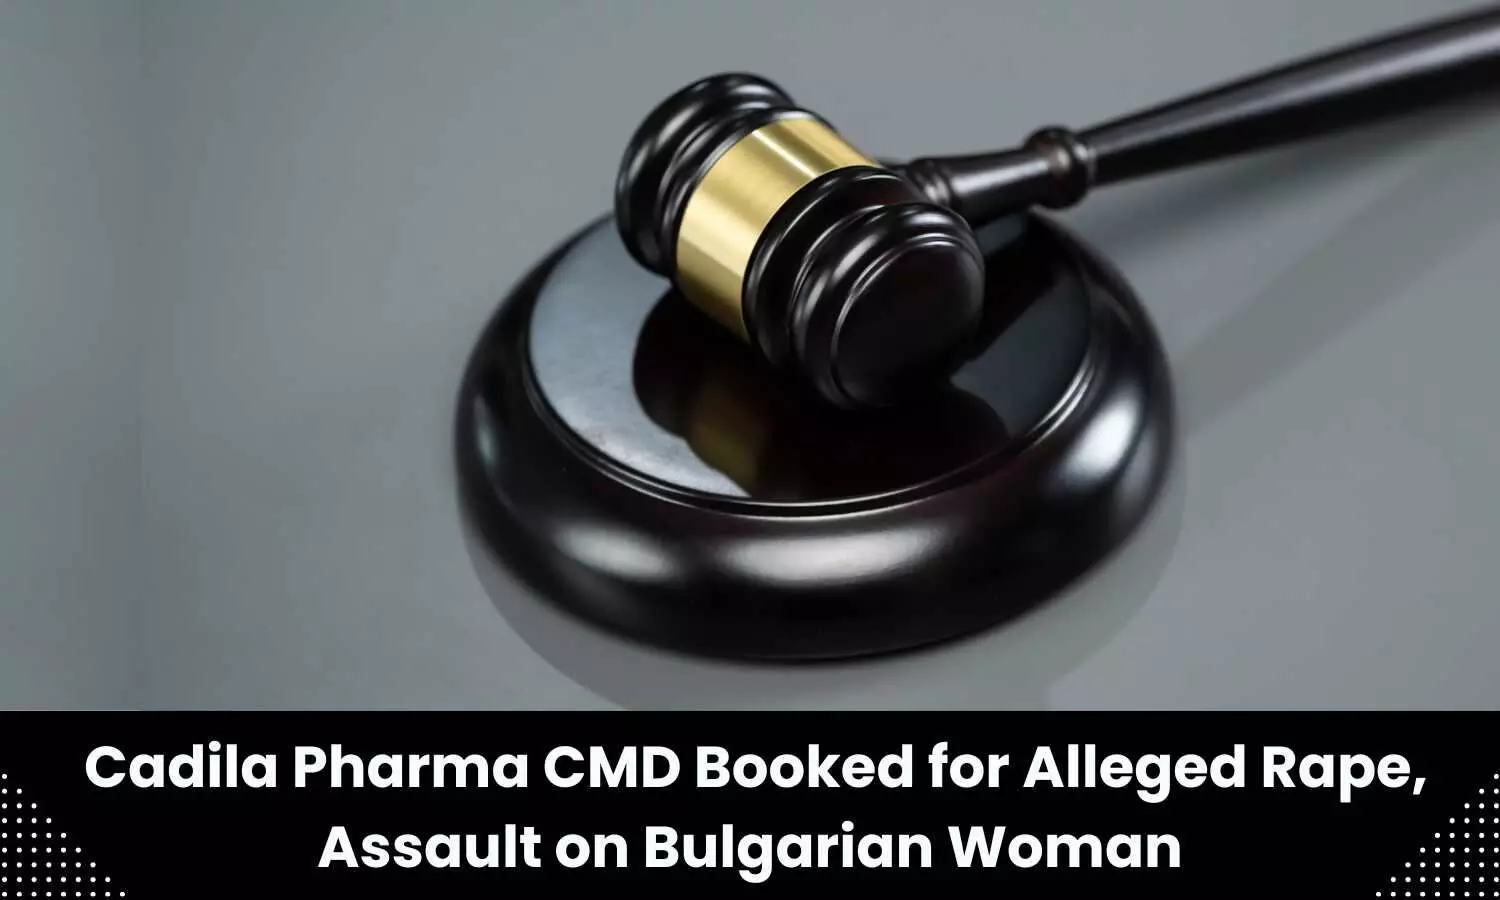 CMD of Cadila Pharma booked for alleged rape, assault on bulgarian woman